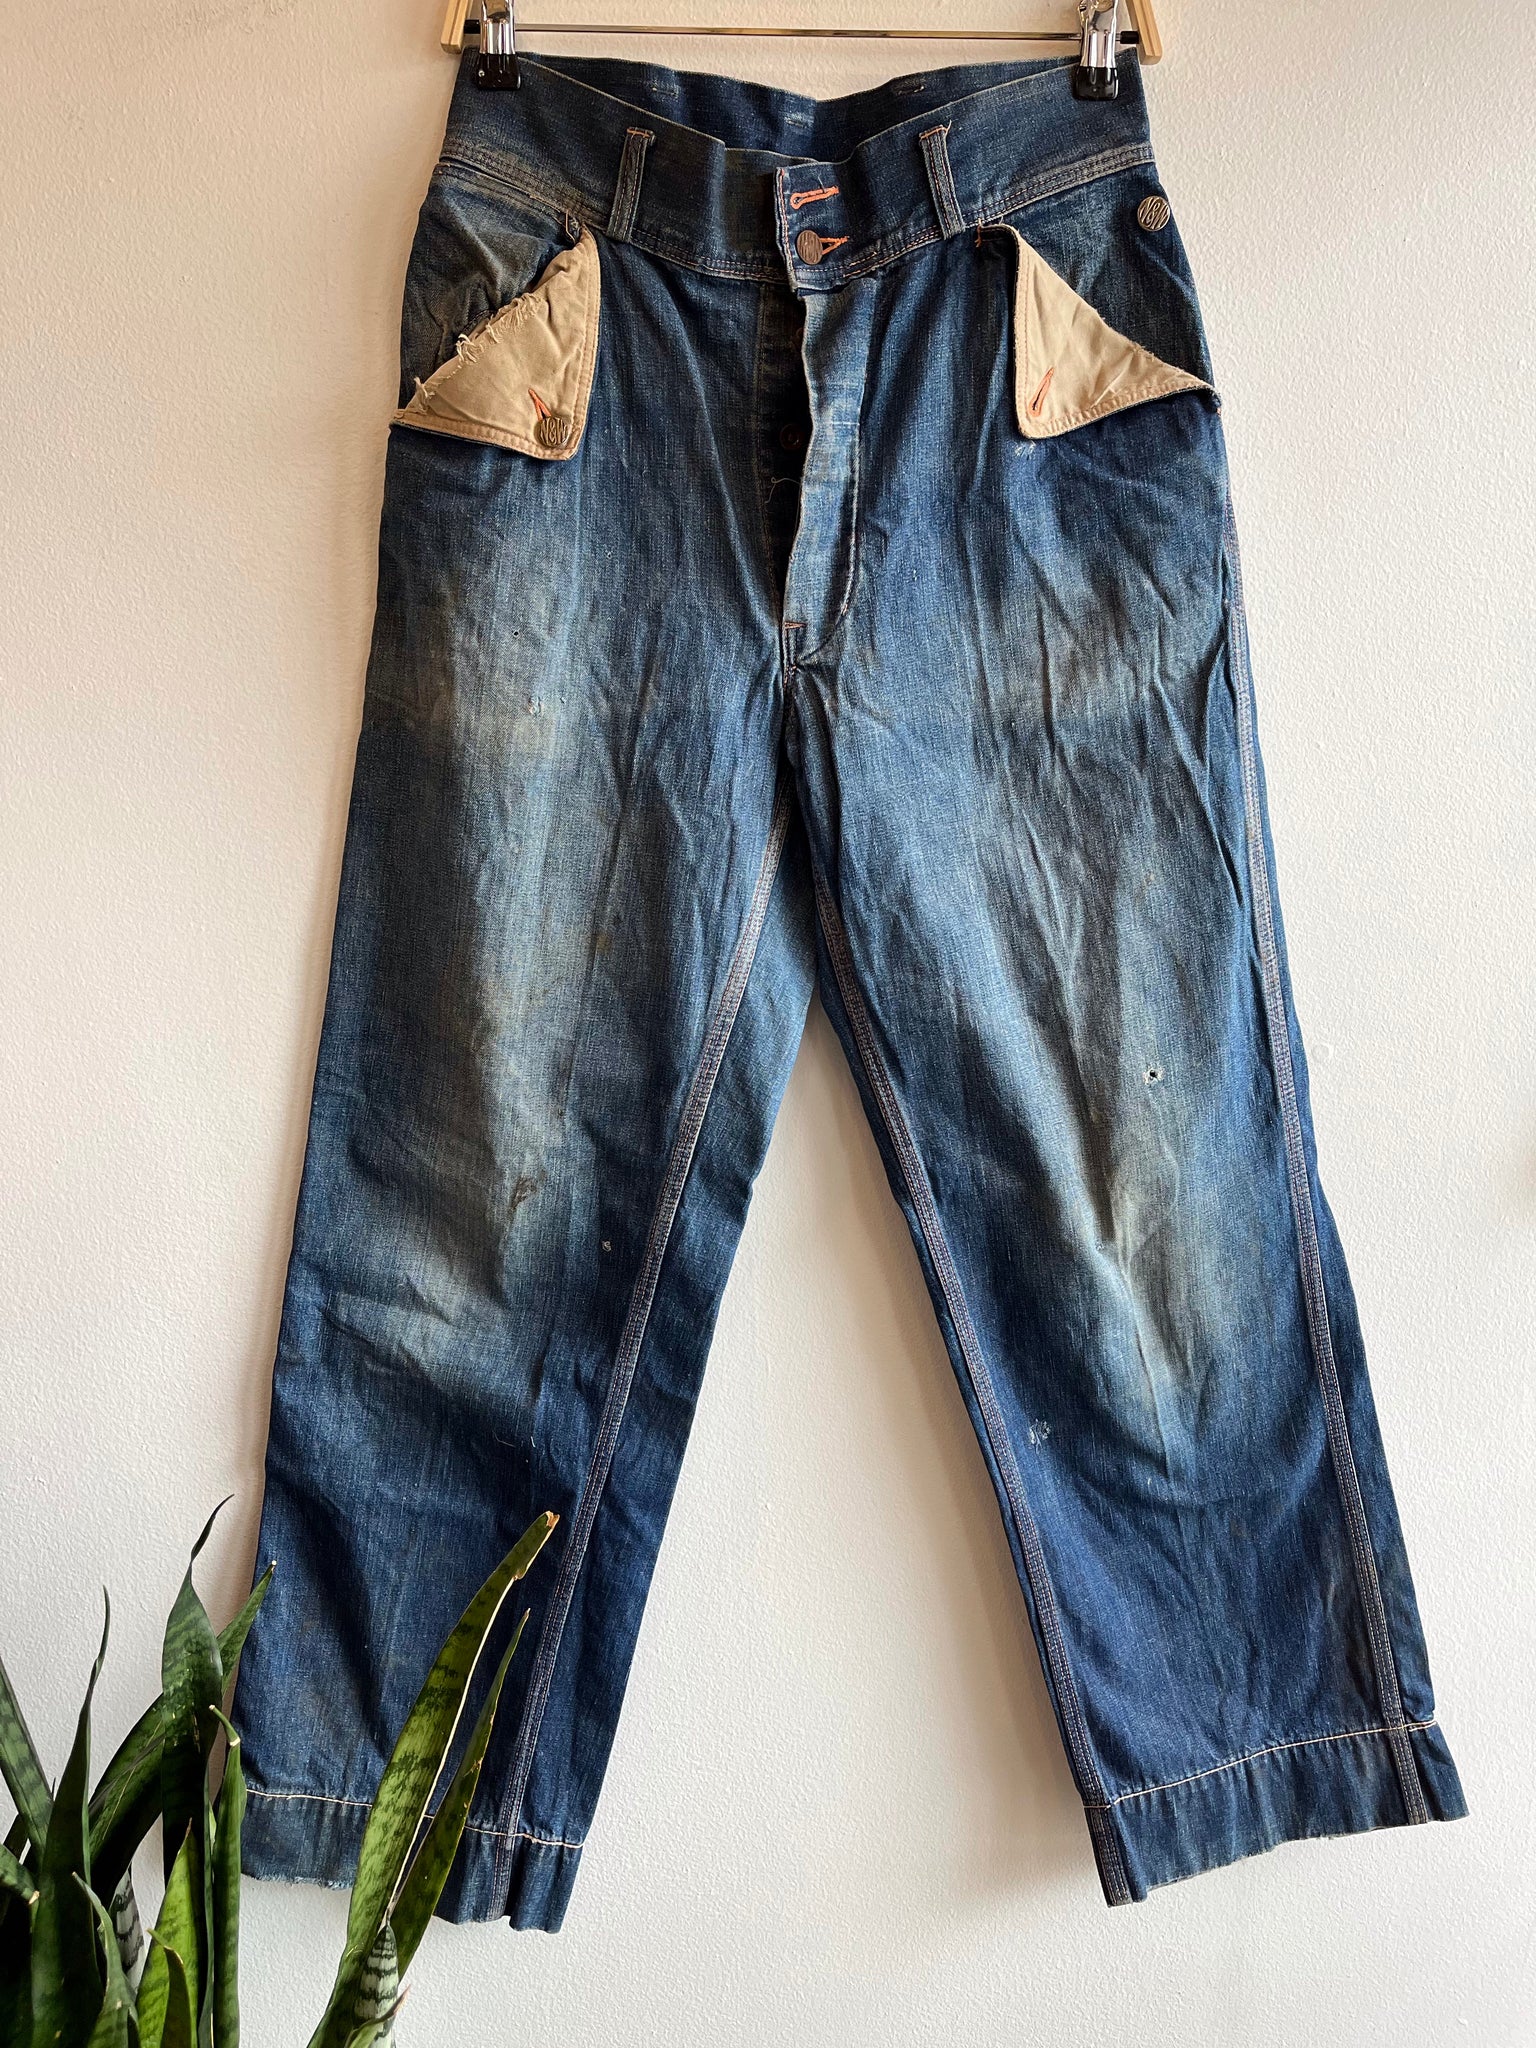 Vintage 1940’s Norfolk & Western Denim Work Jeans